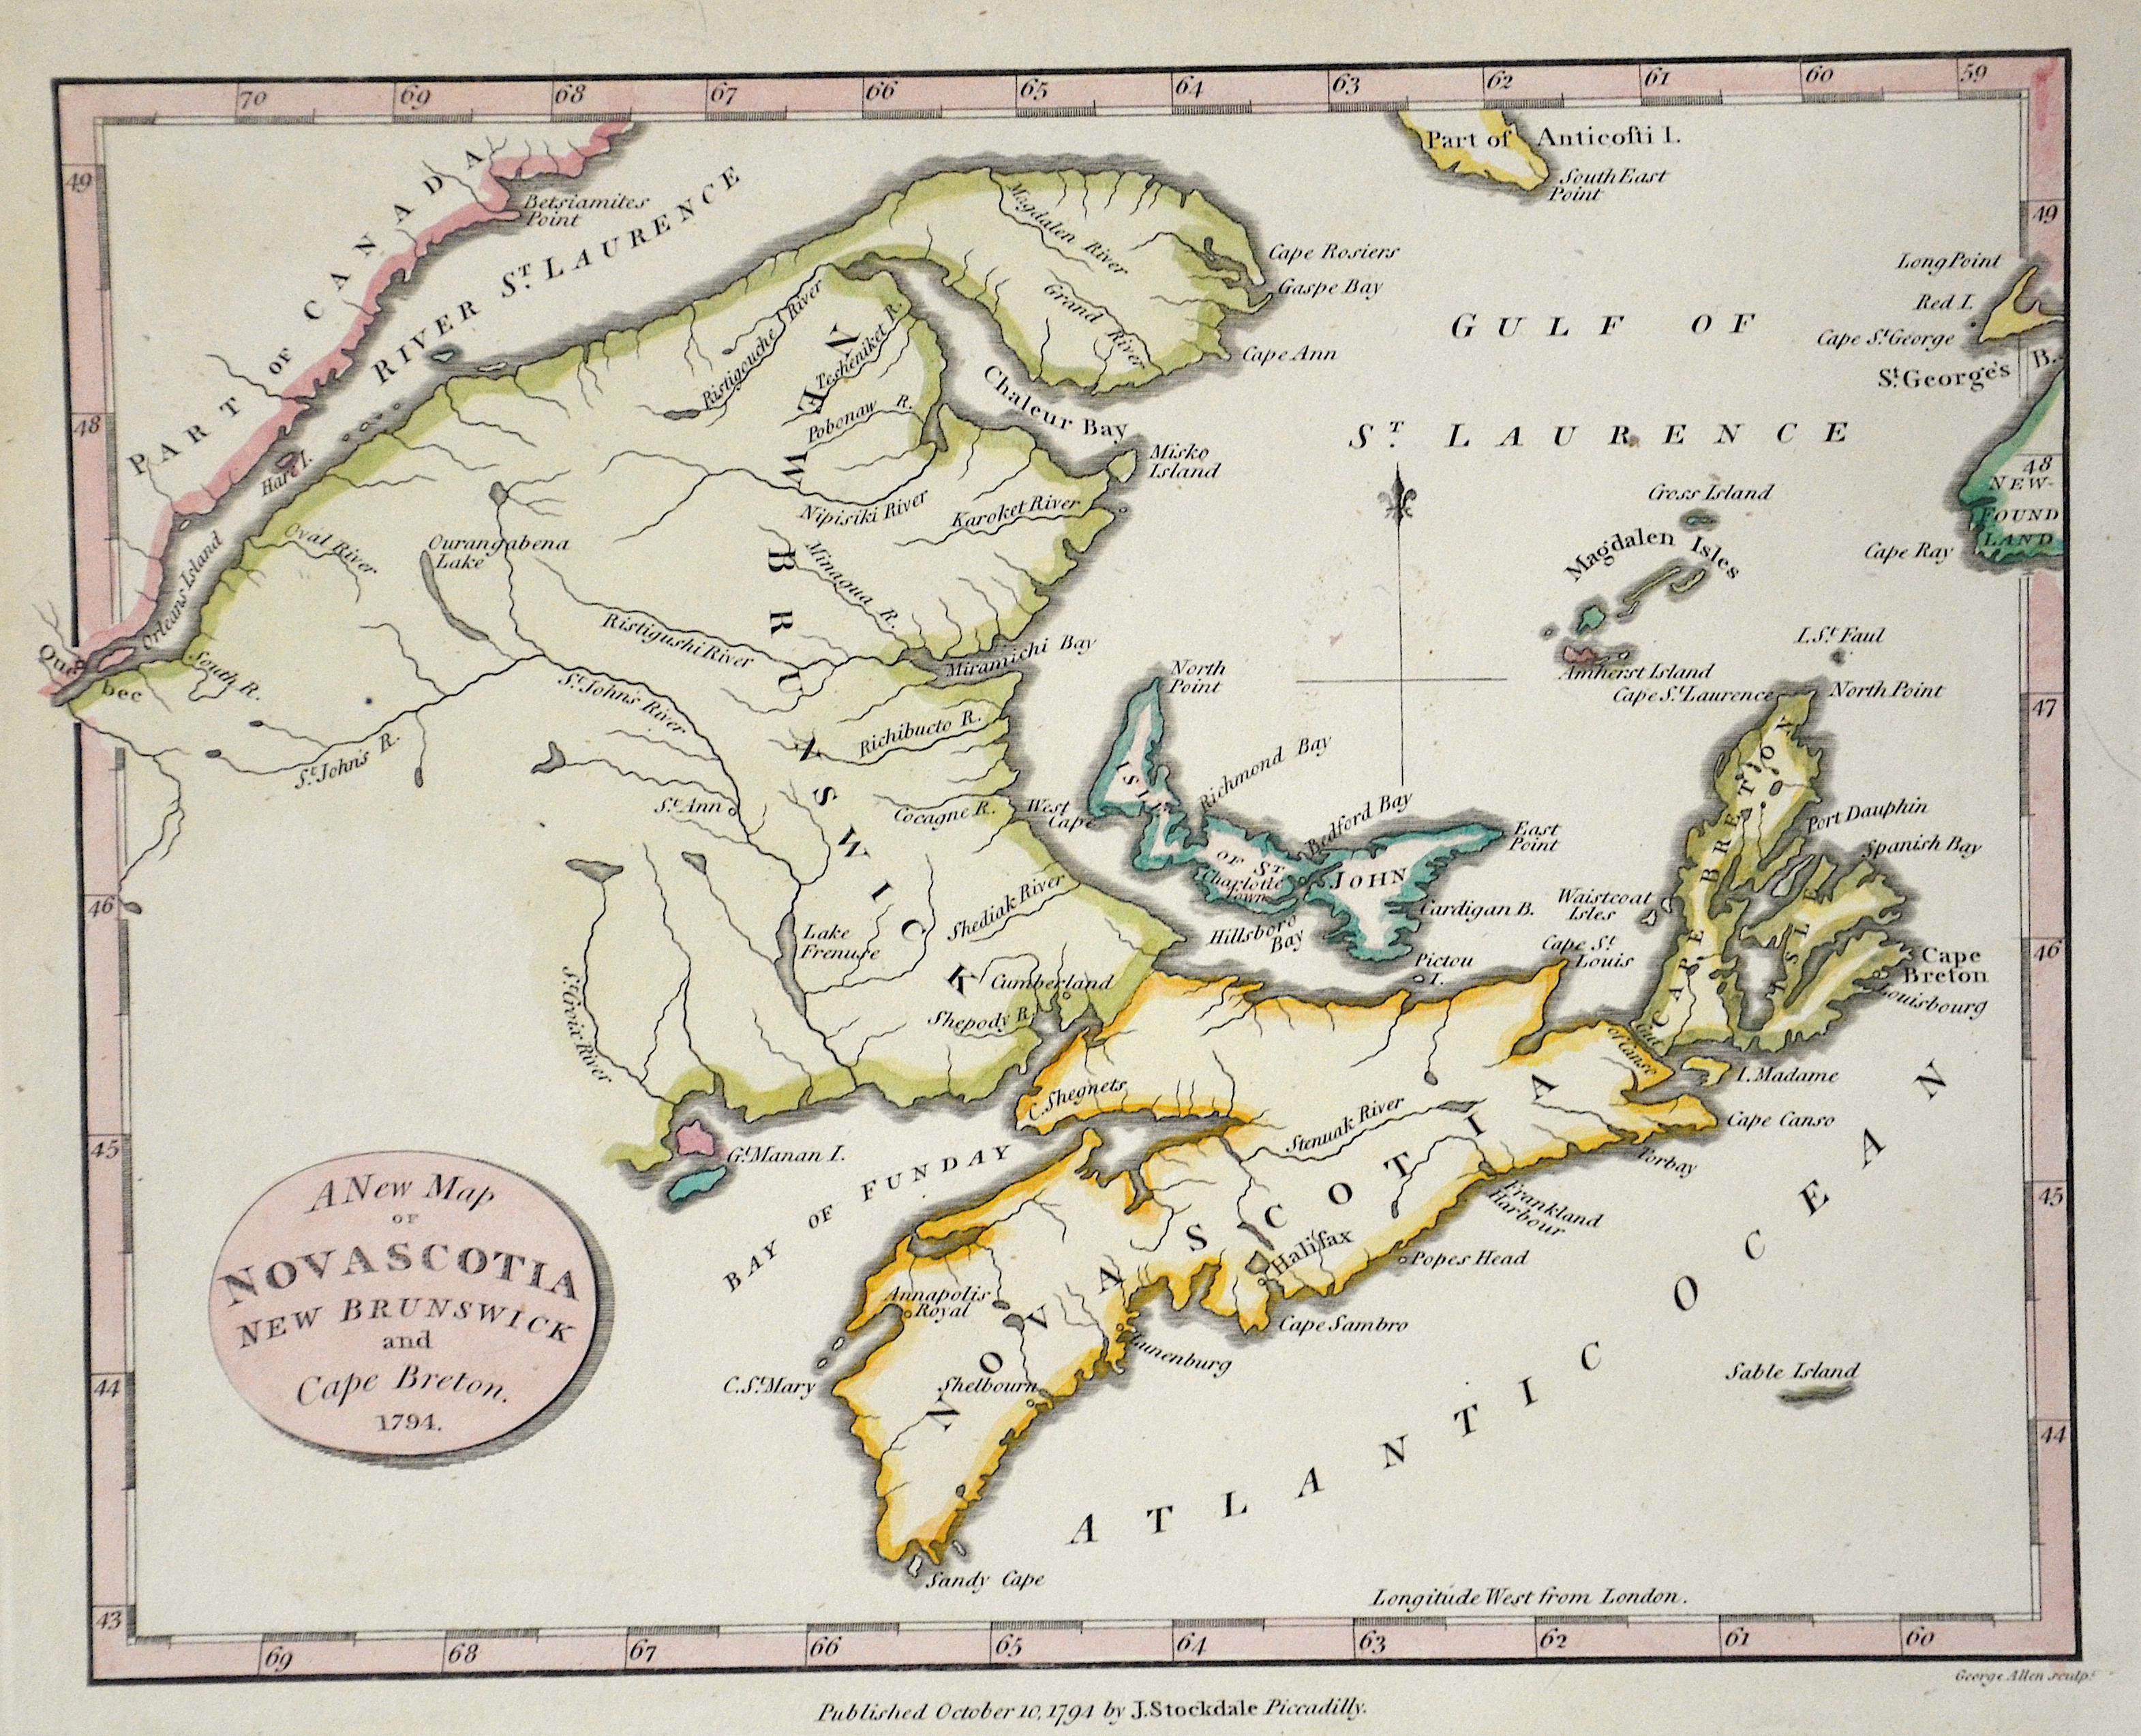 Stockdale John A new map of Nova Scotia New Brunswick and Cape Breton